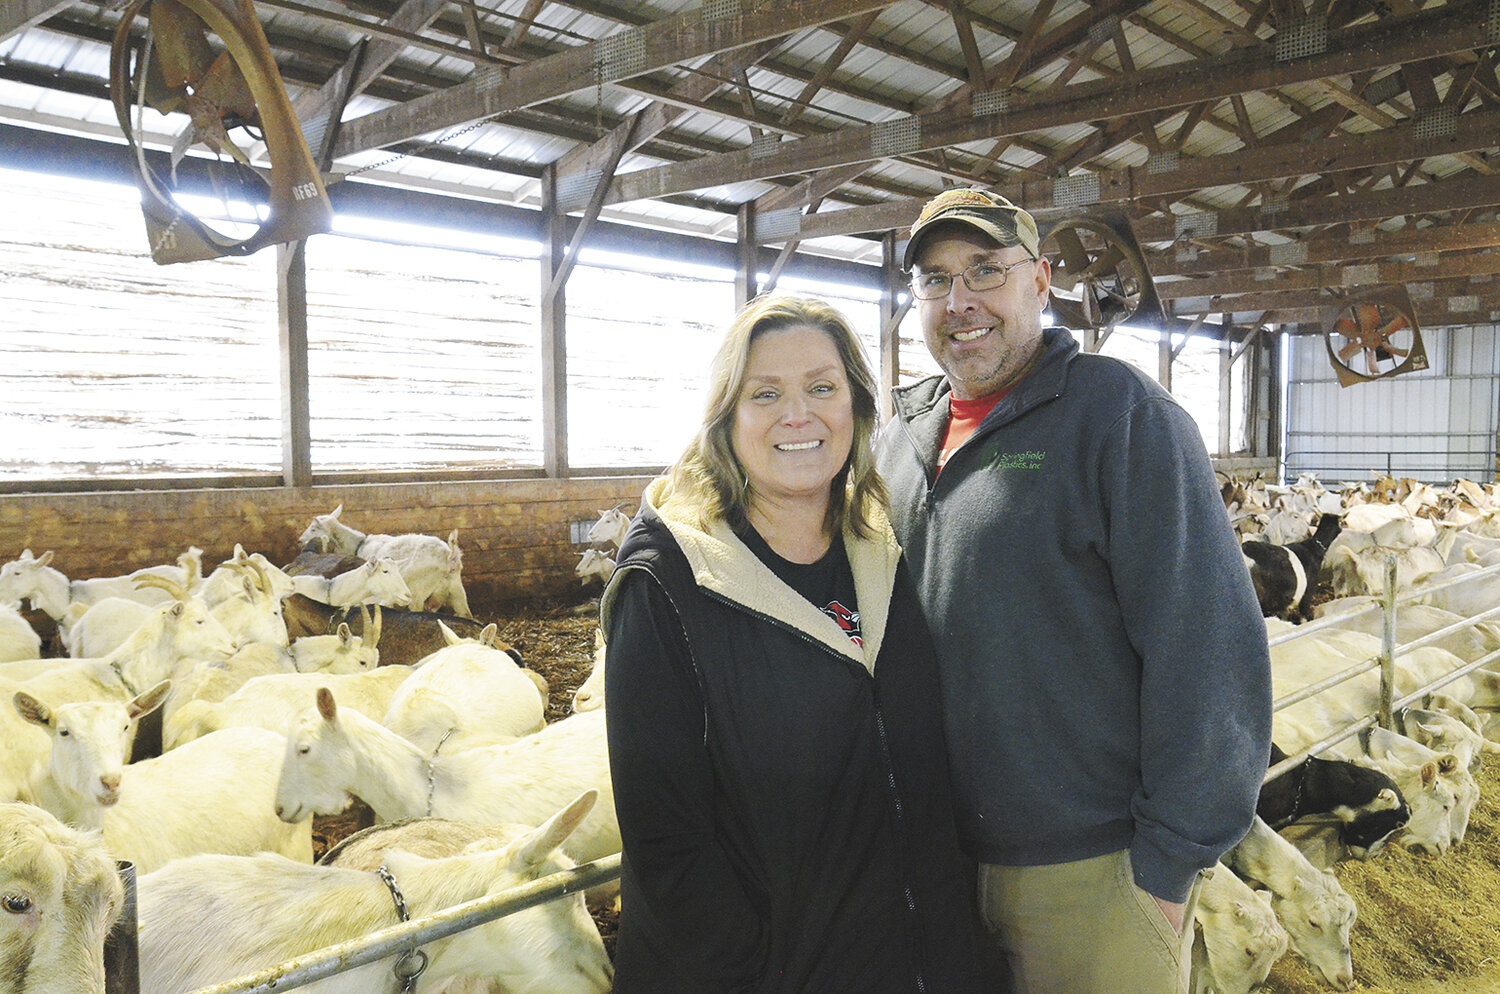 Kim and Aaron Dooley stand in a barn Jan. 30 on their farm, O’Dools Dairy Goats, near Orfordville, Wisconsin. The Dooleys milk 500 goats and farm 180 acres.